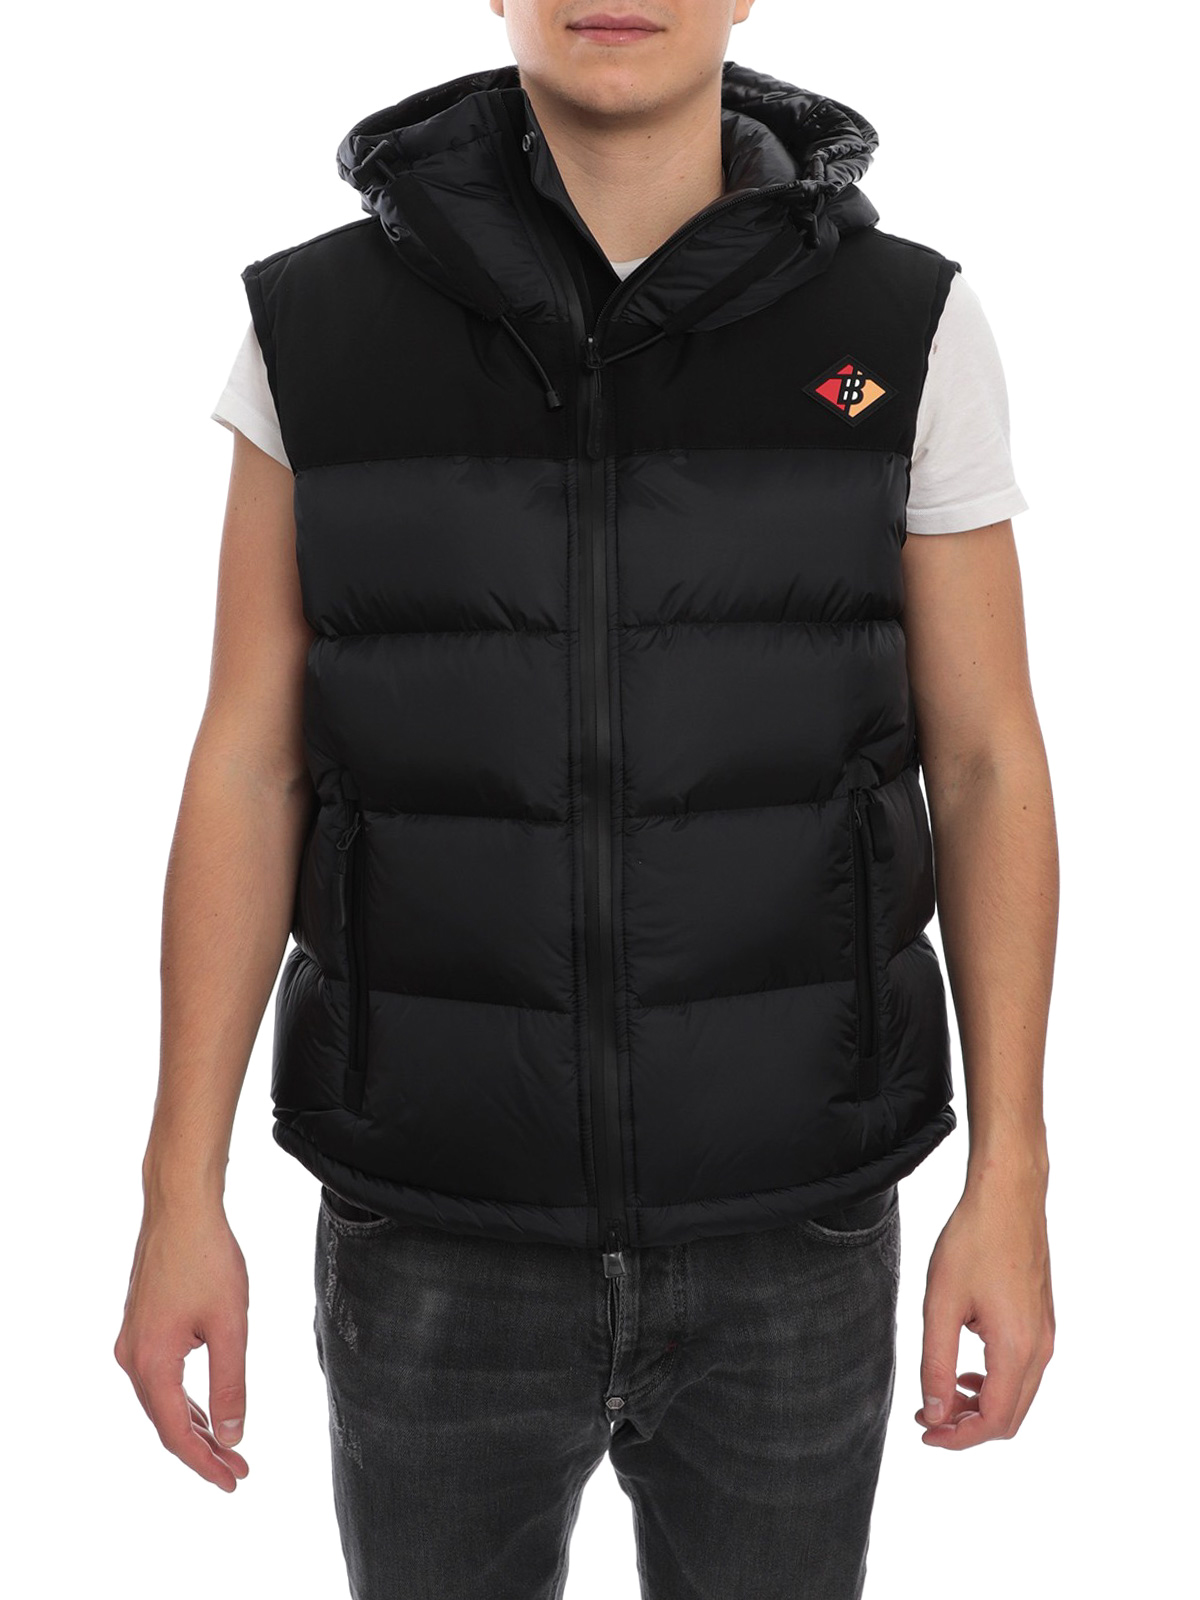 burberry black vest